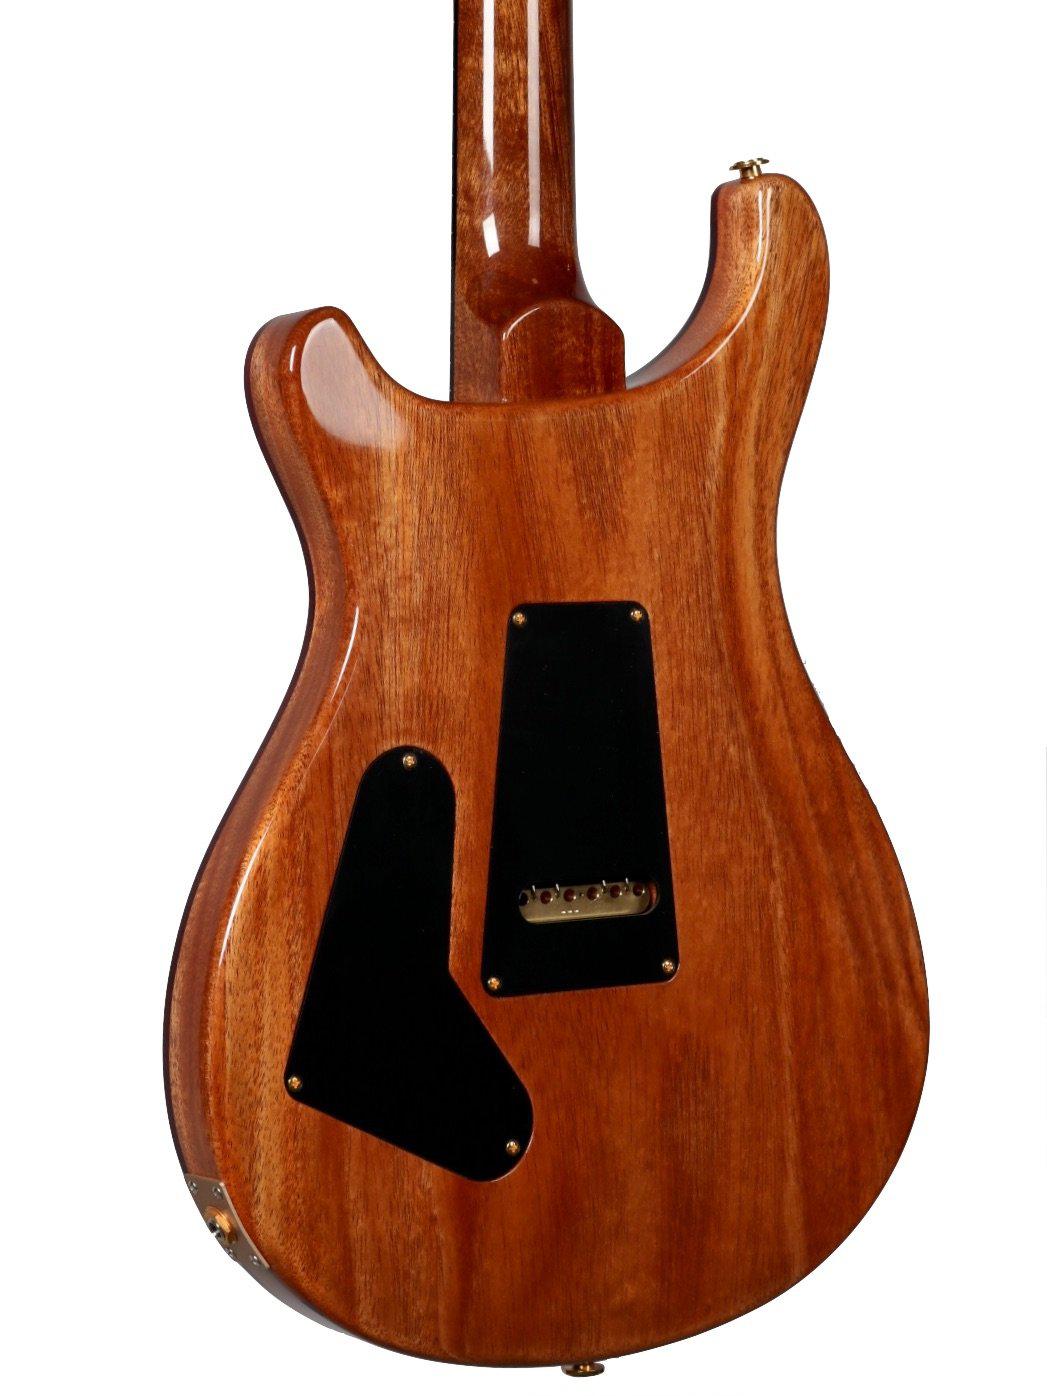 PRS Custom 24 Artist Pack 35th Anniversary Ebony Board #286591 - Paul Reed Smith Guitars - Heartbreaker Guitars